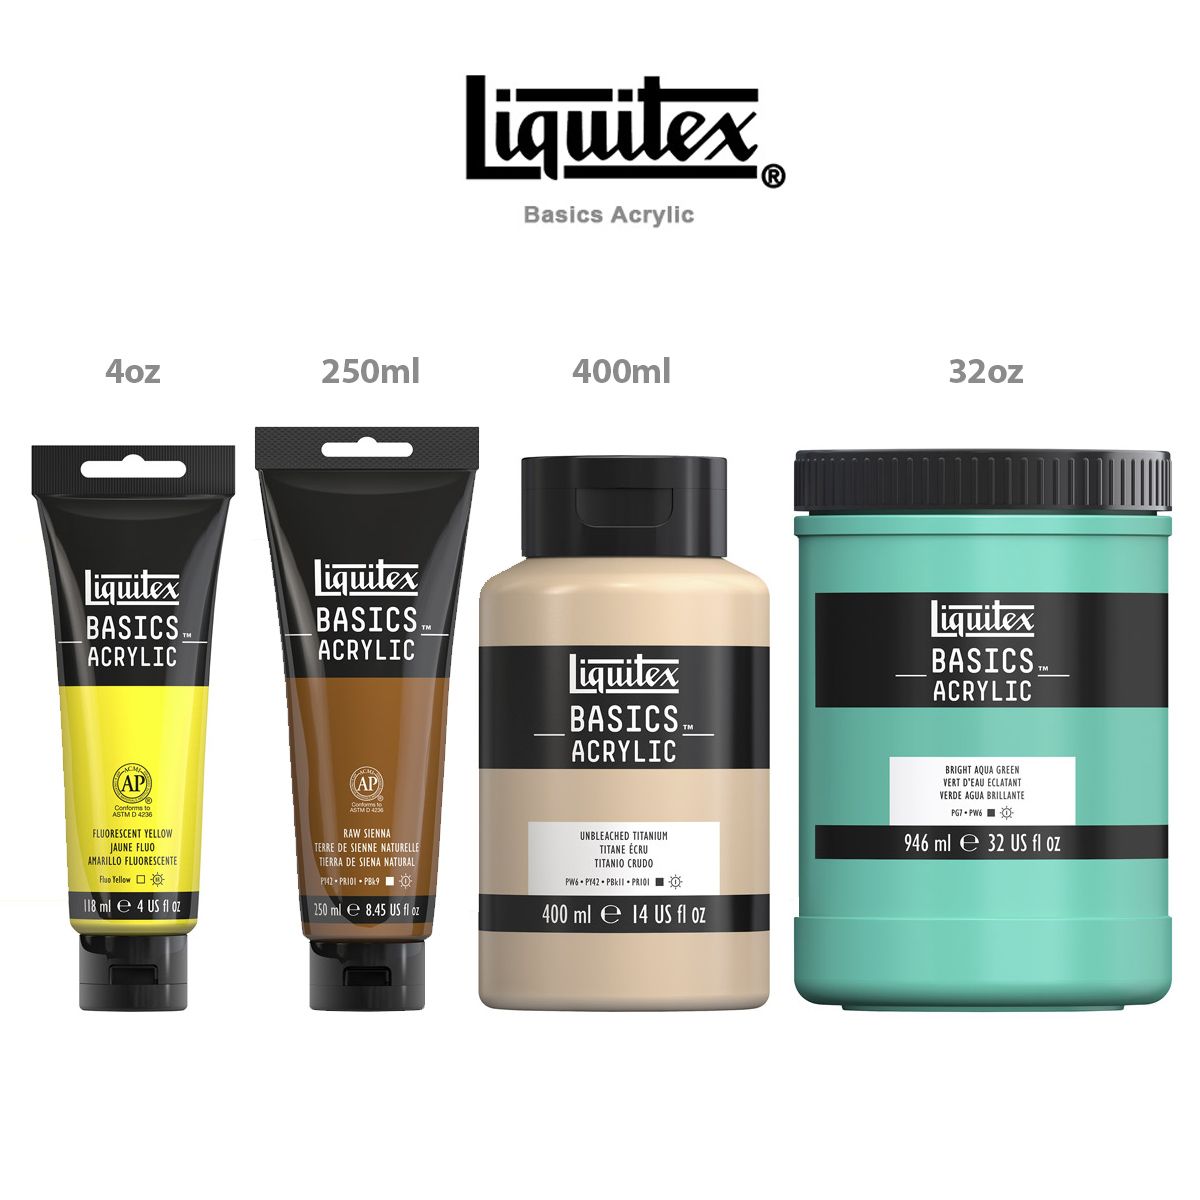 Liquitex Basics - Mars Black, 4 oz tube